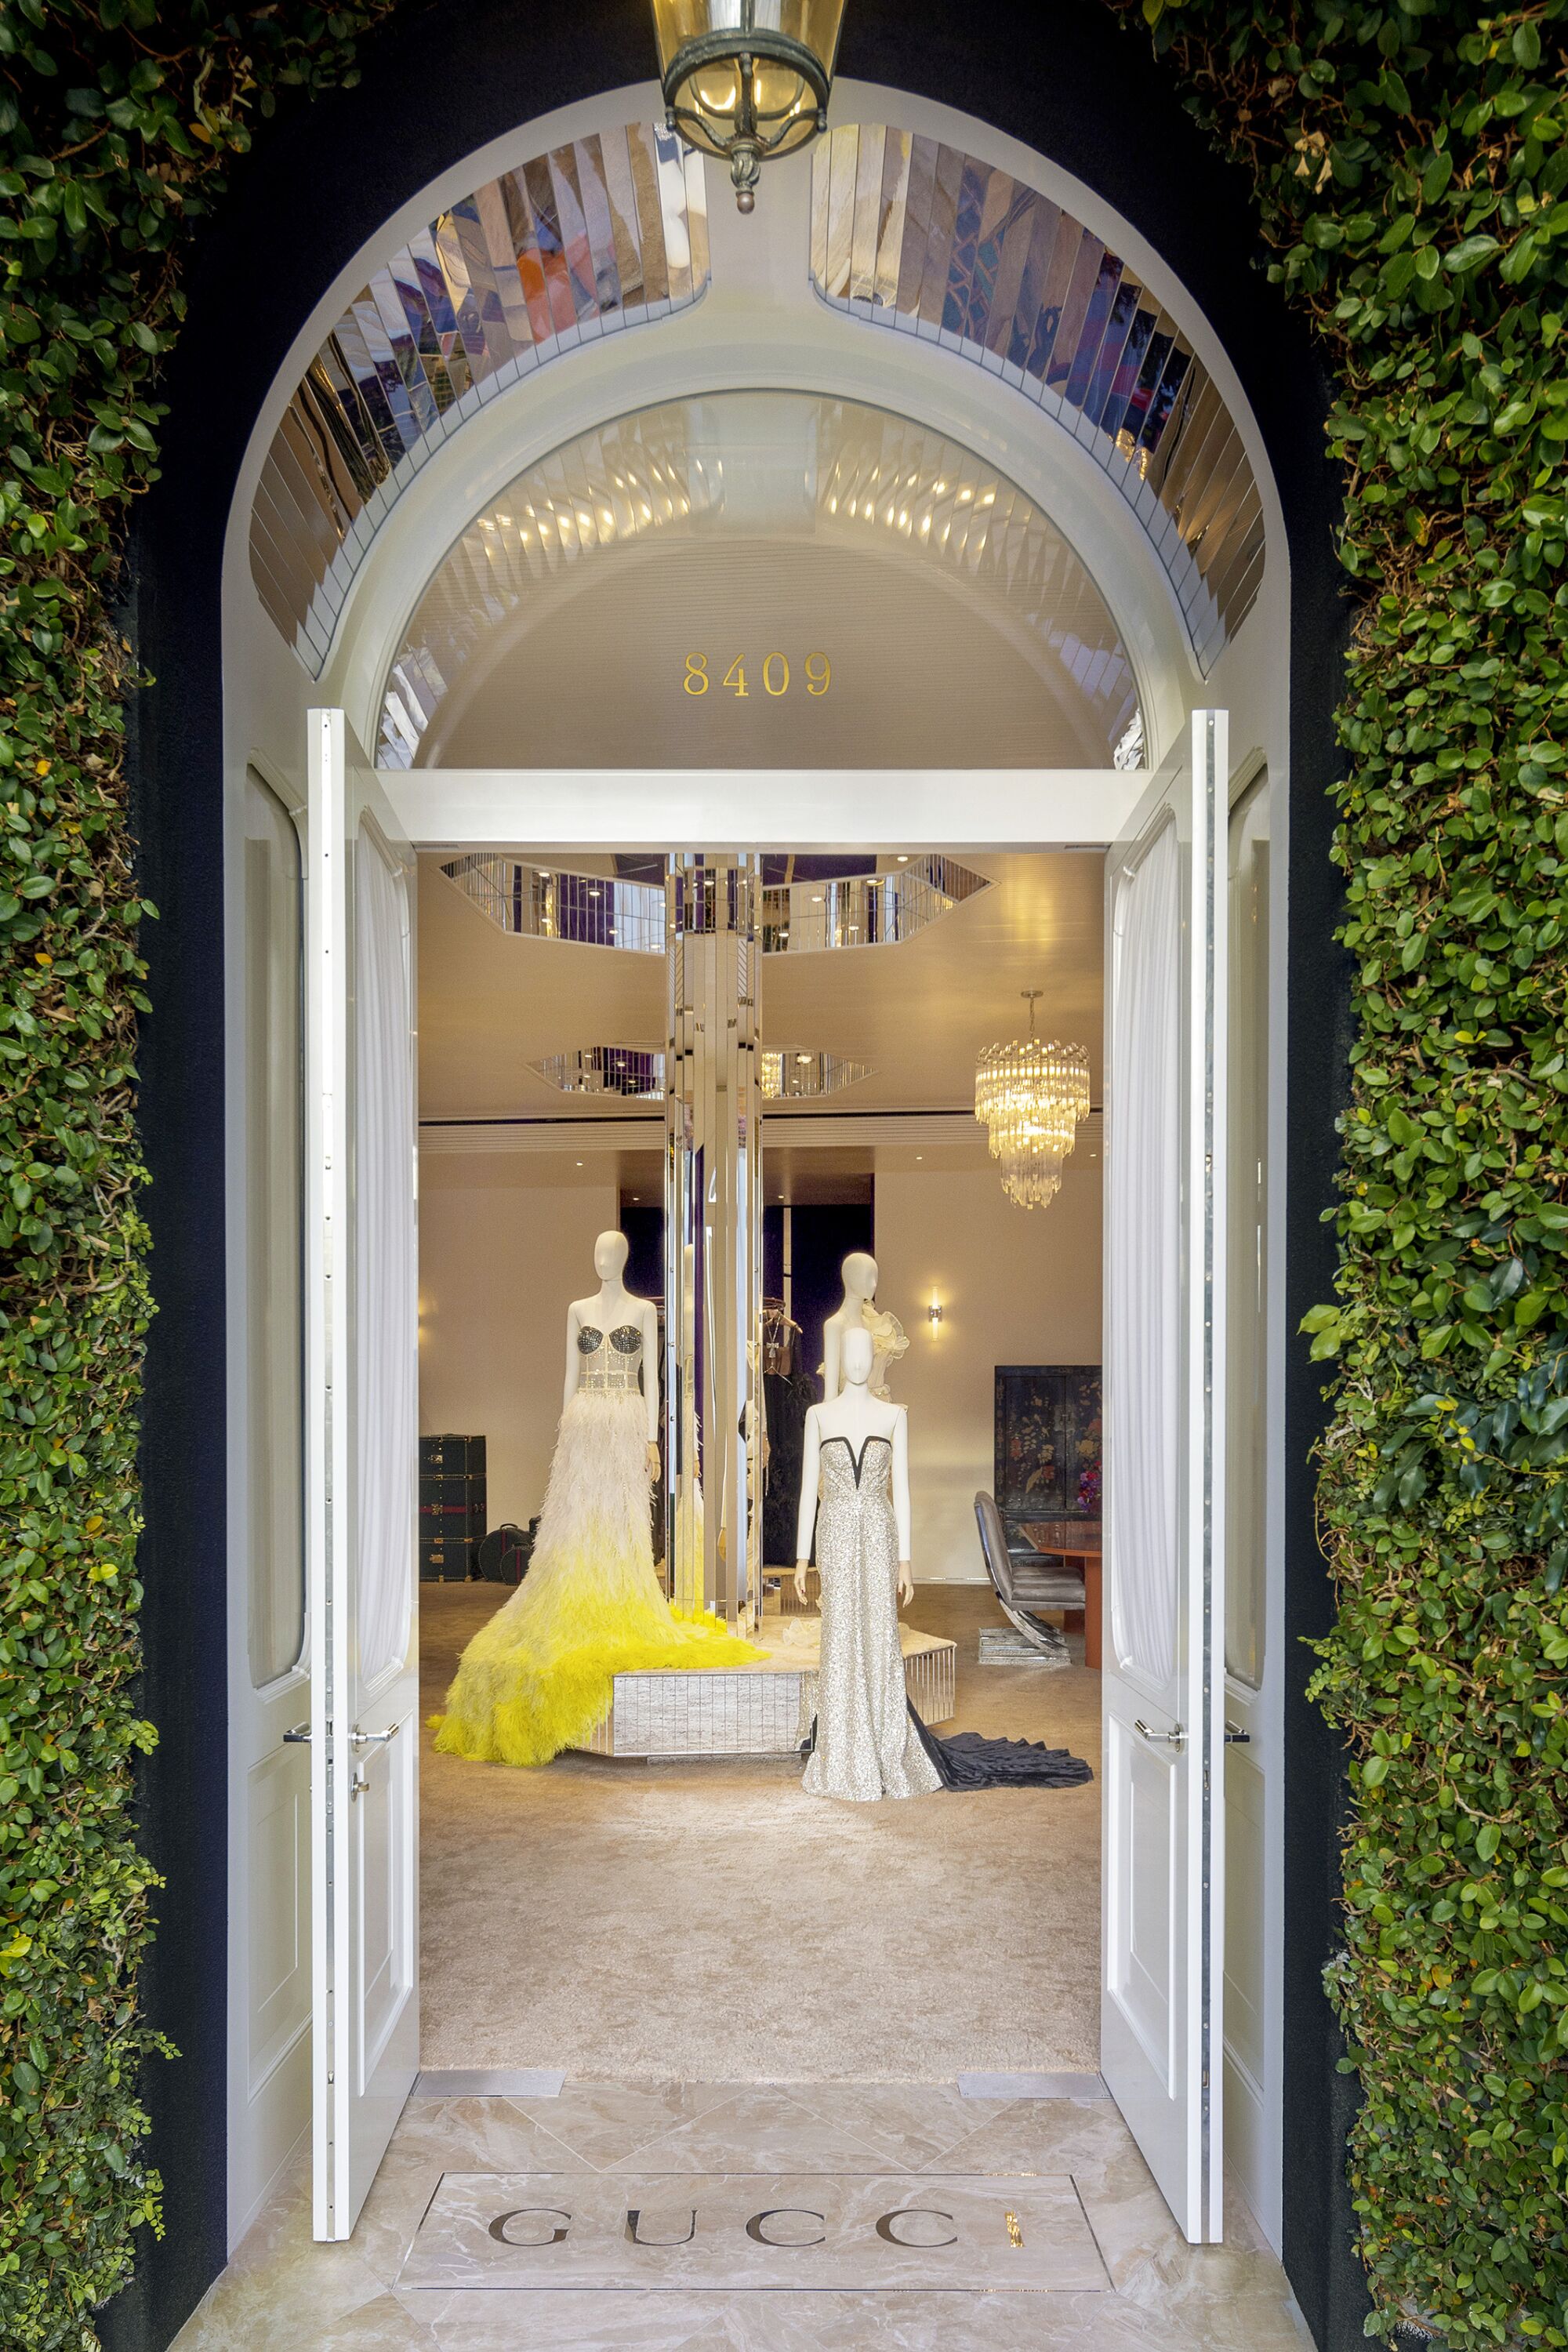 A view of dresses on mannequins through an open door.